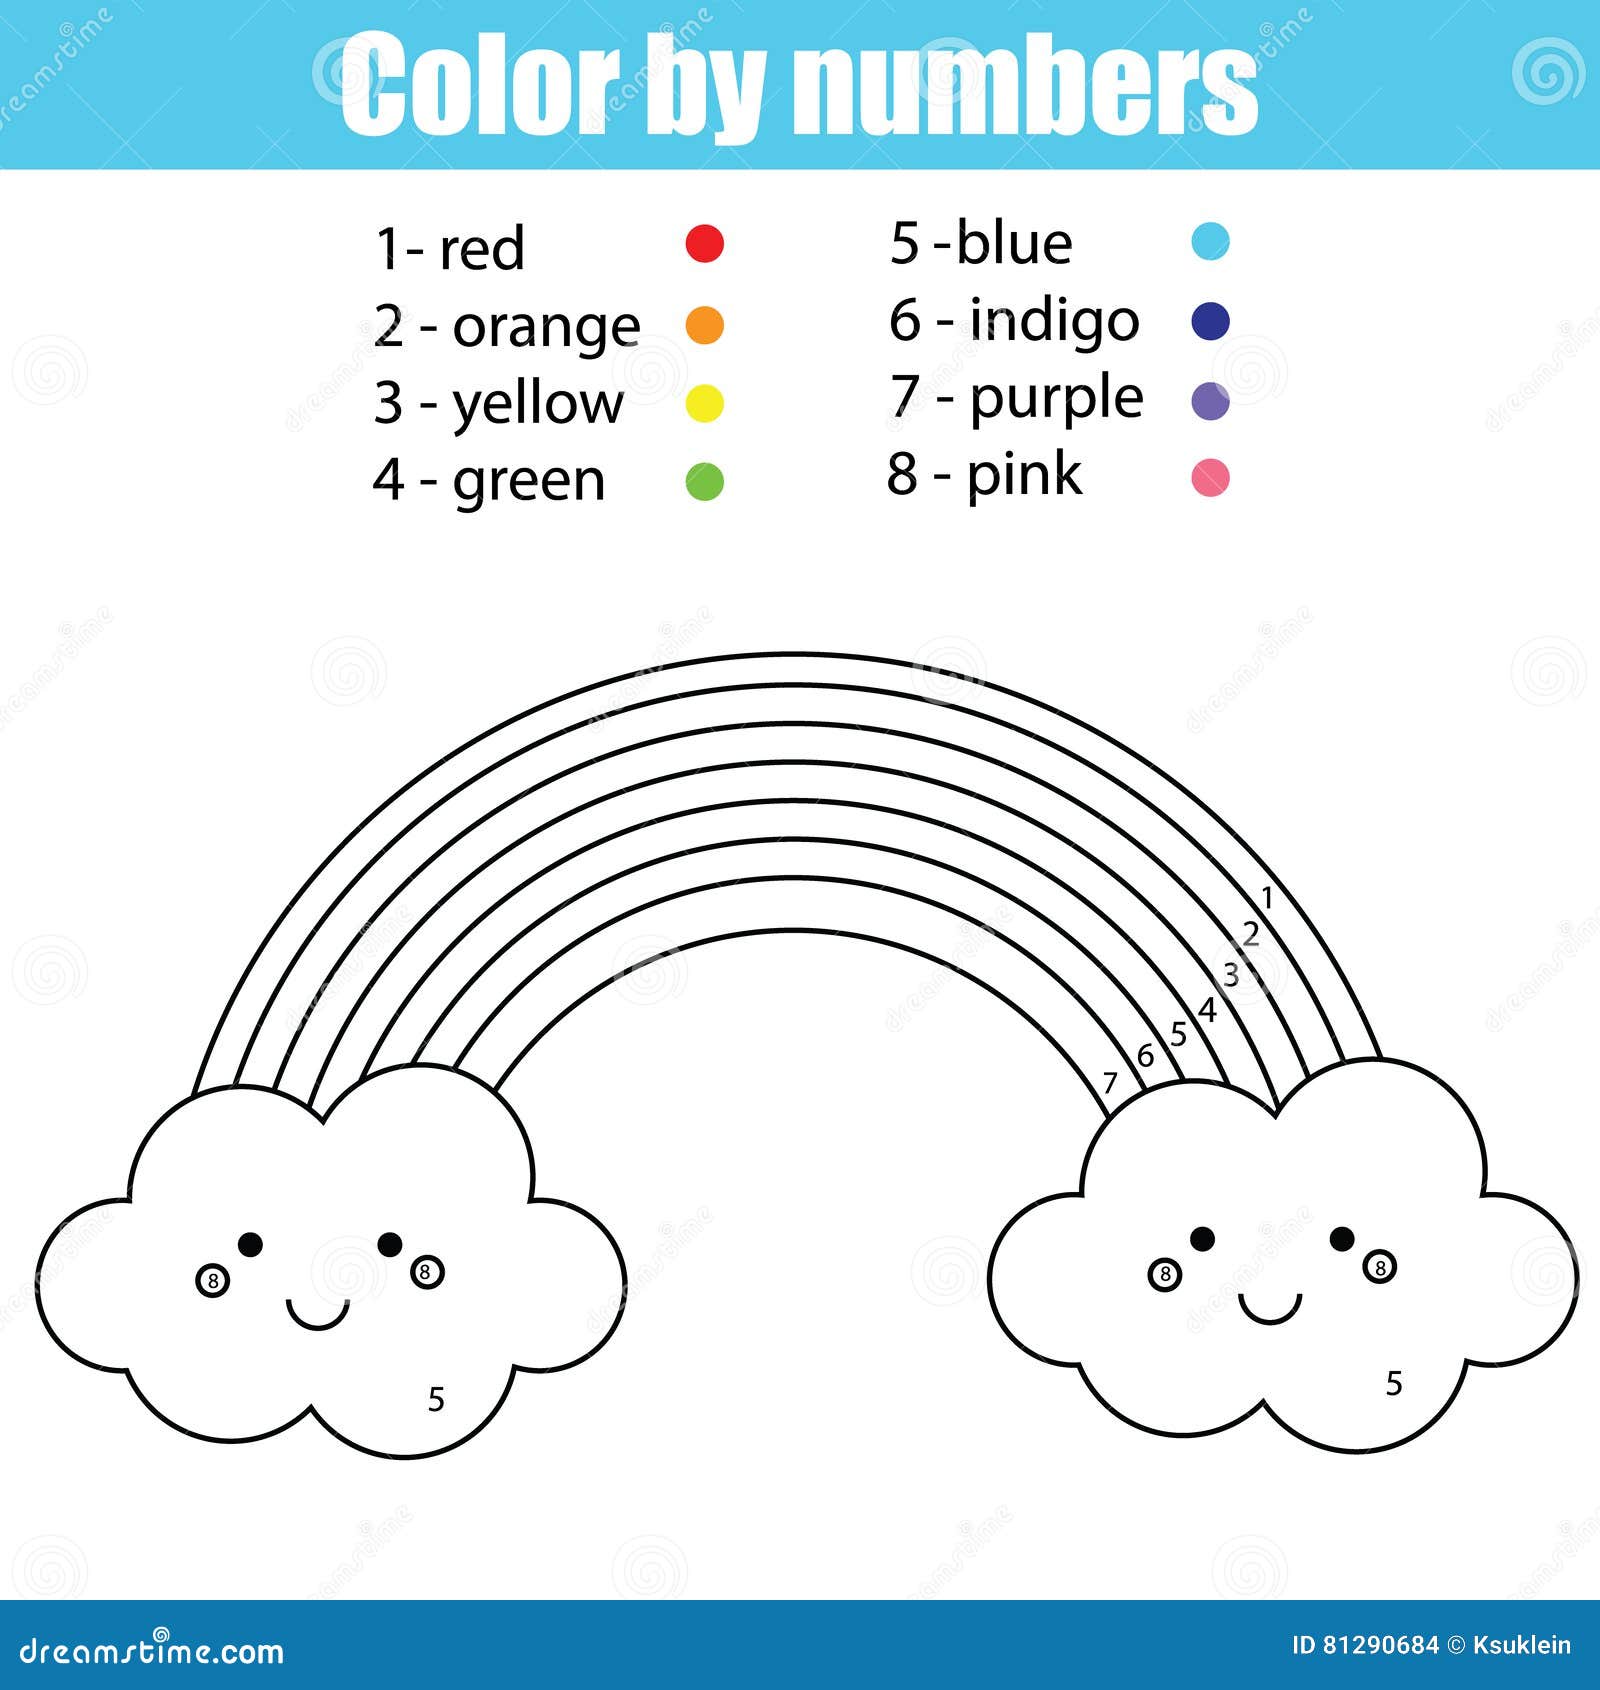 Download Rainbow Arcoiris Para Colorear Kawaii - imagen para colorear